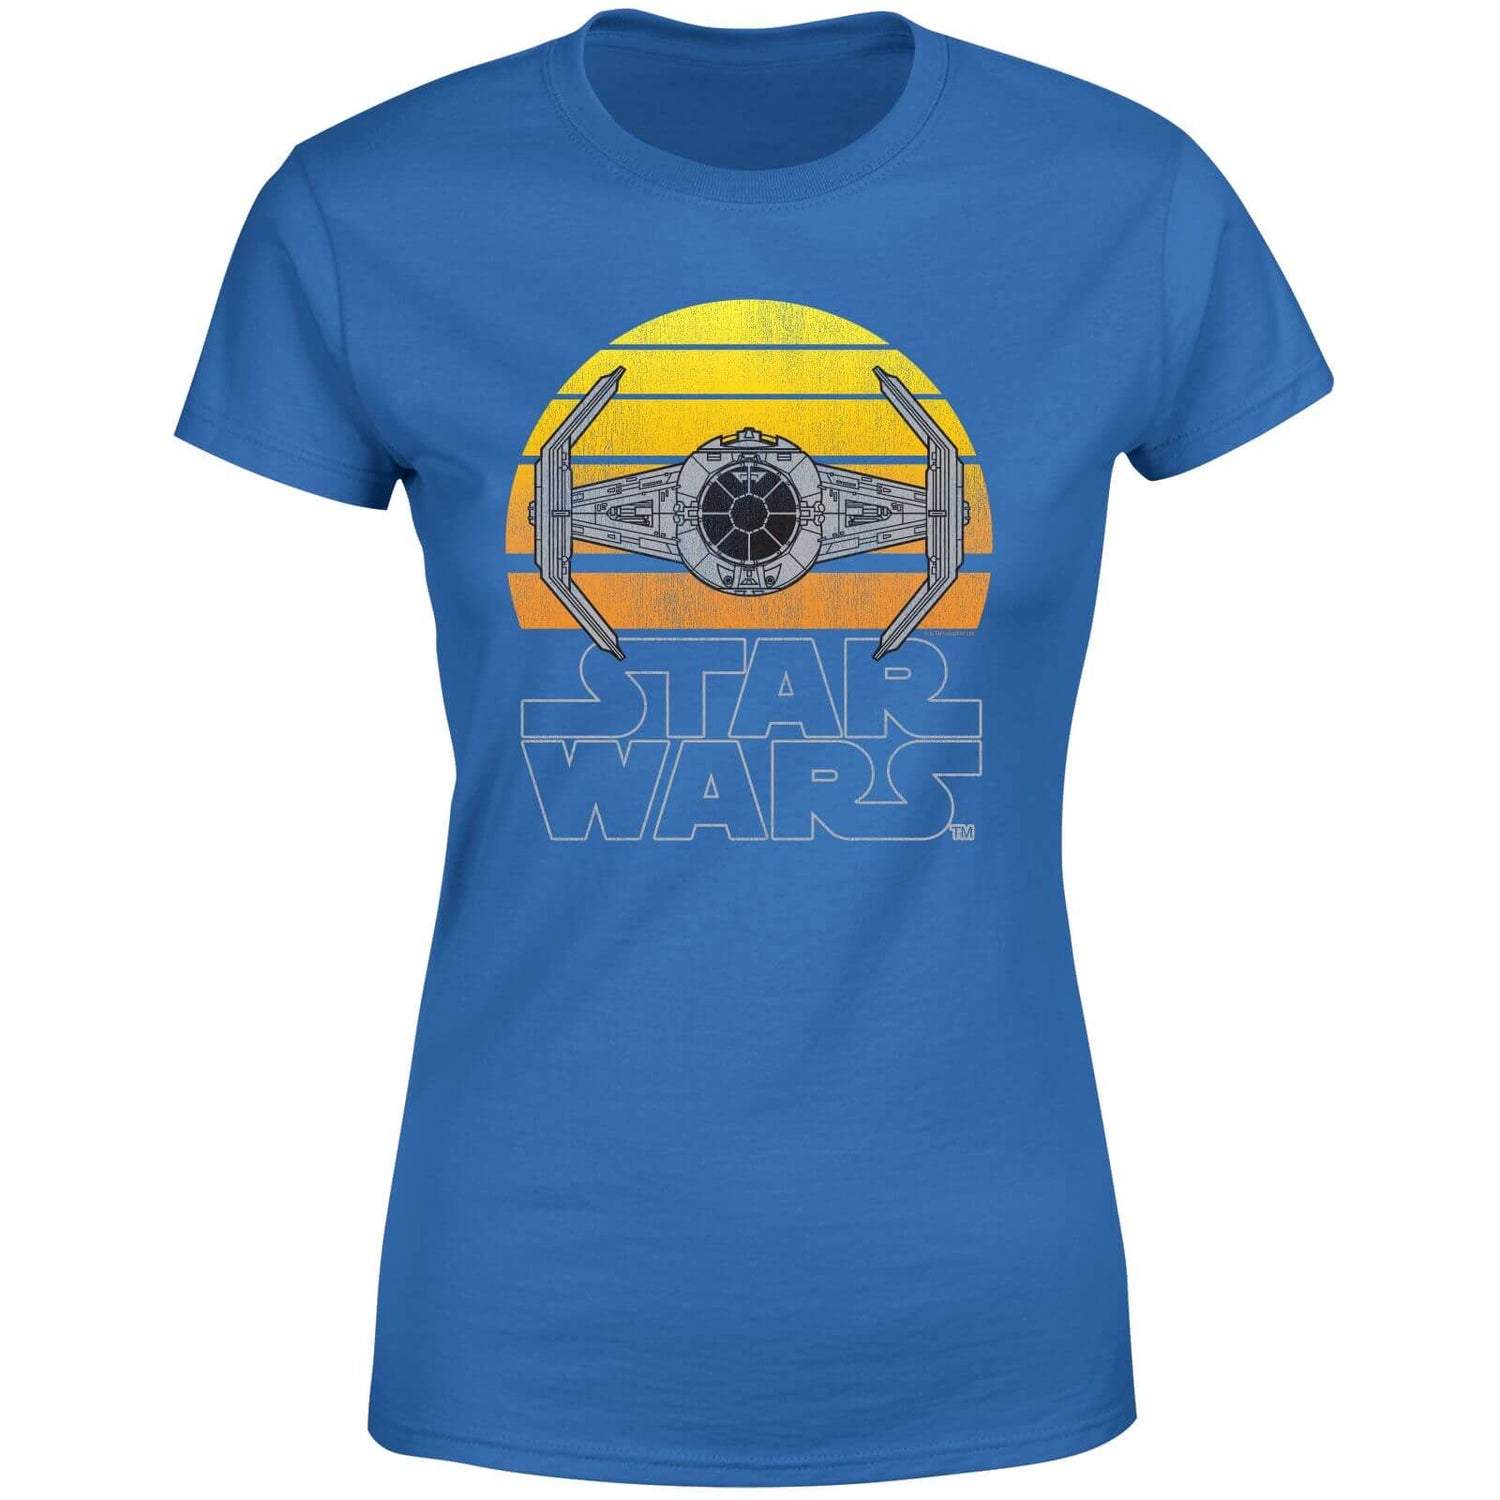 Star Wars Classic Sunset Tie Women's T-Shirt - Blue